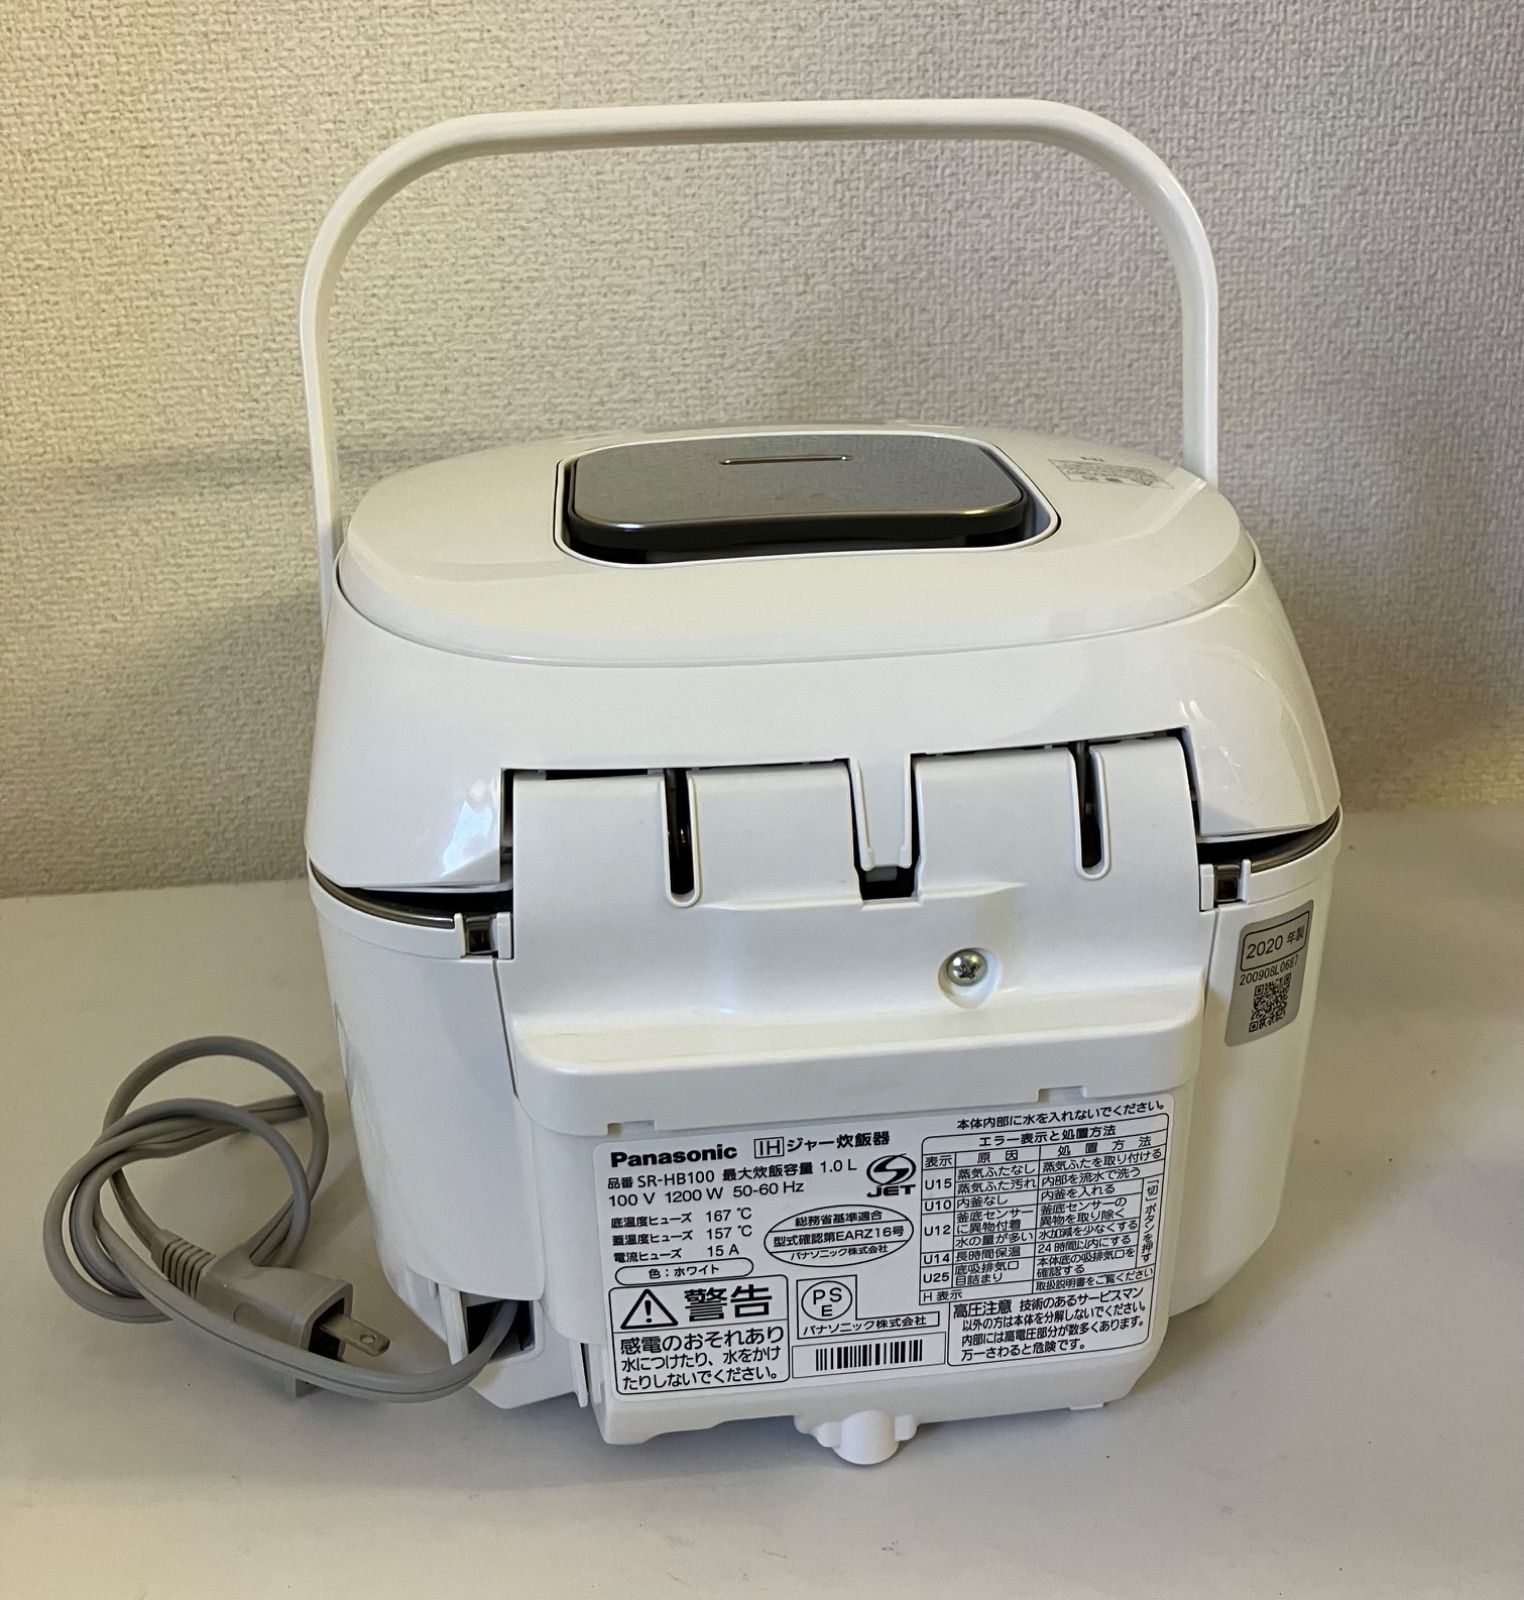 Panasonic パナソニック IH ジャー炊飯器 5合炊き SR-HB100